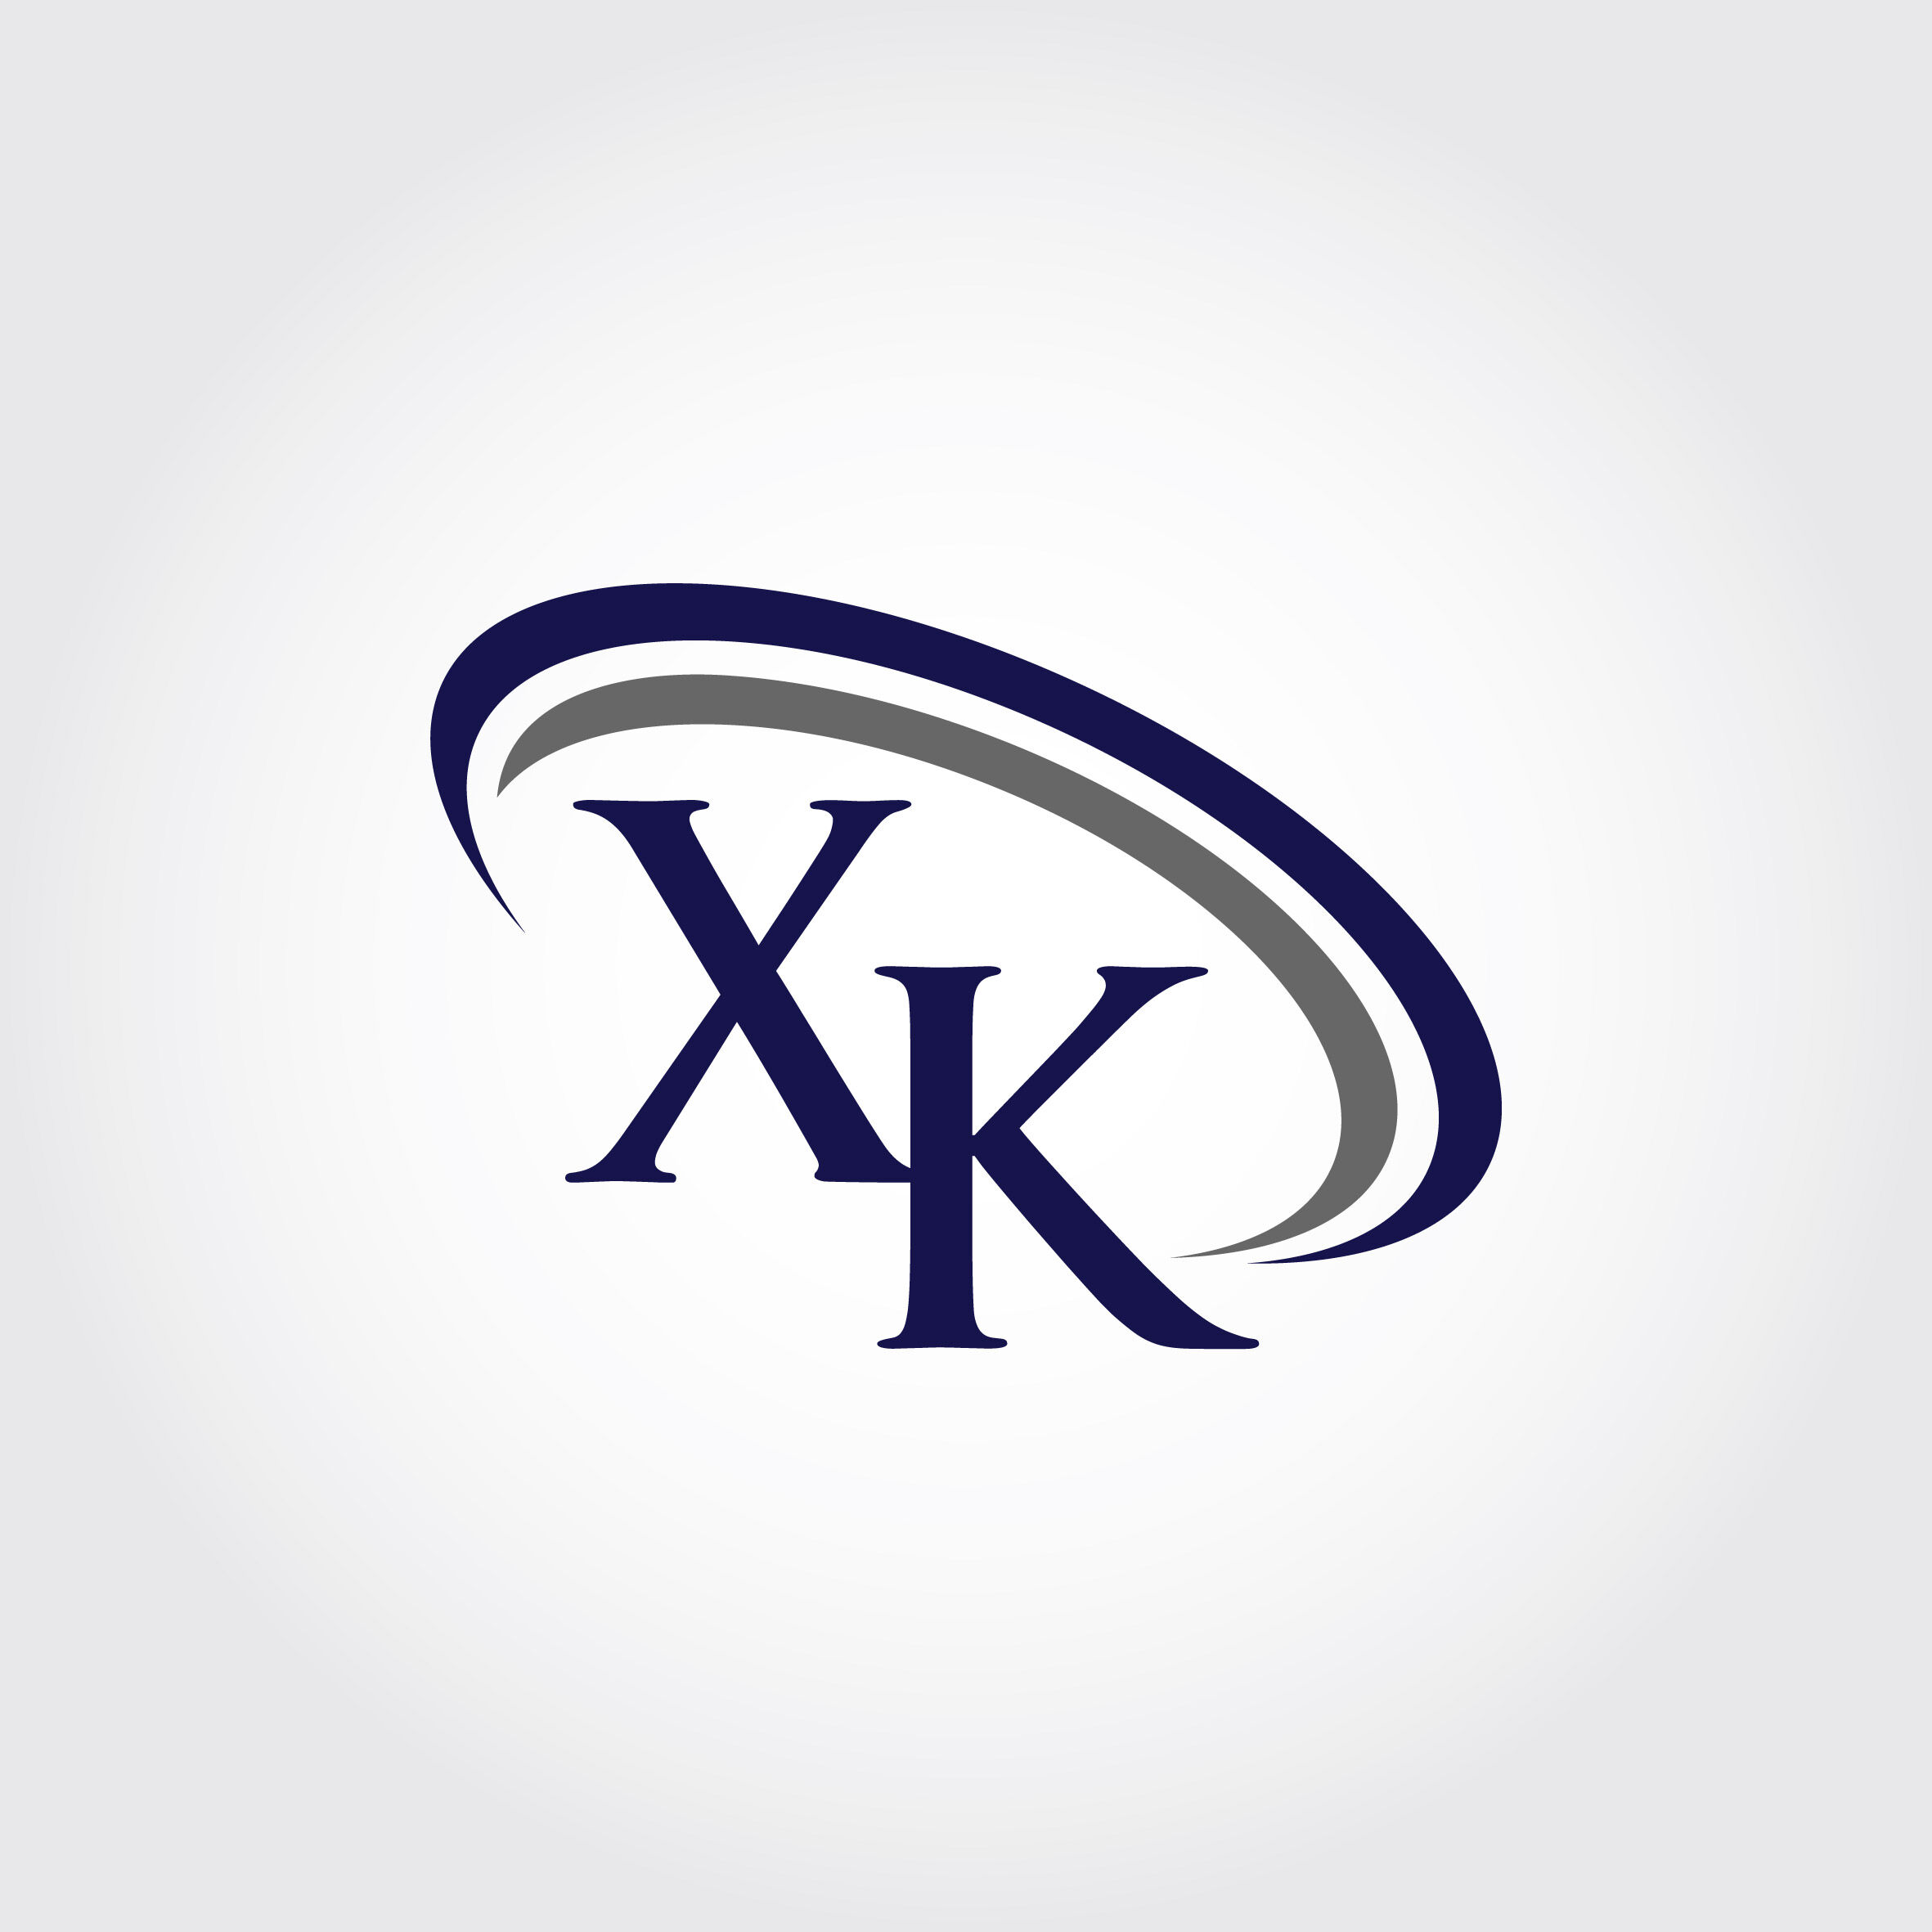 Monogram Xk Logo Design By Vectorseller Thehungryjpeg Com